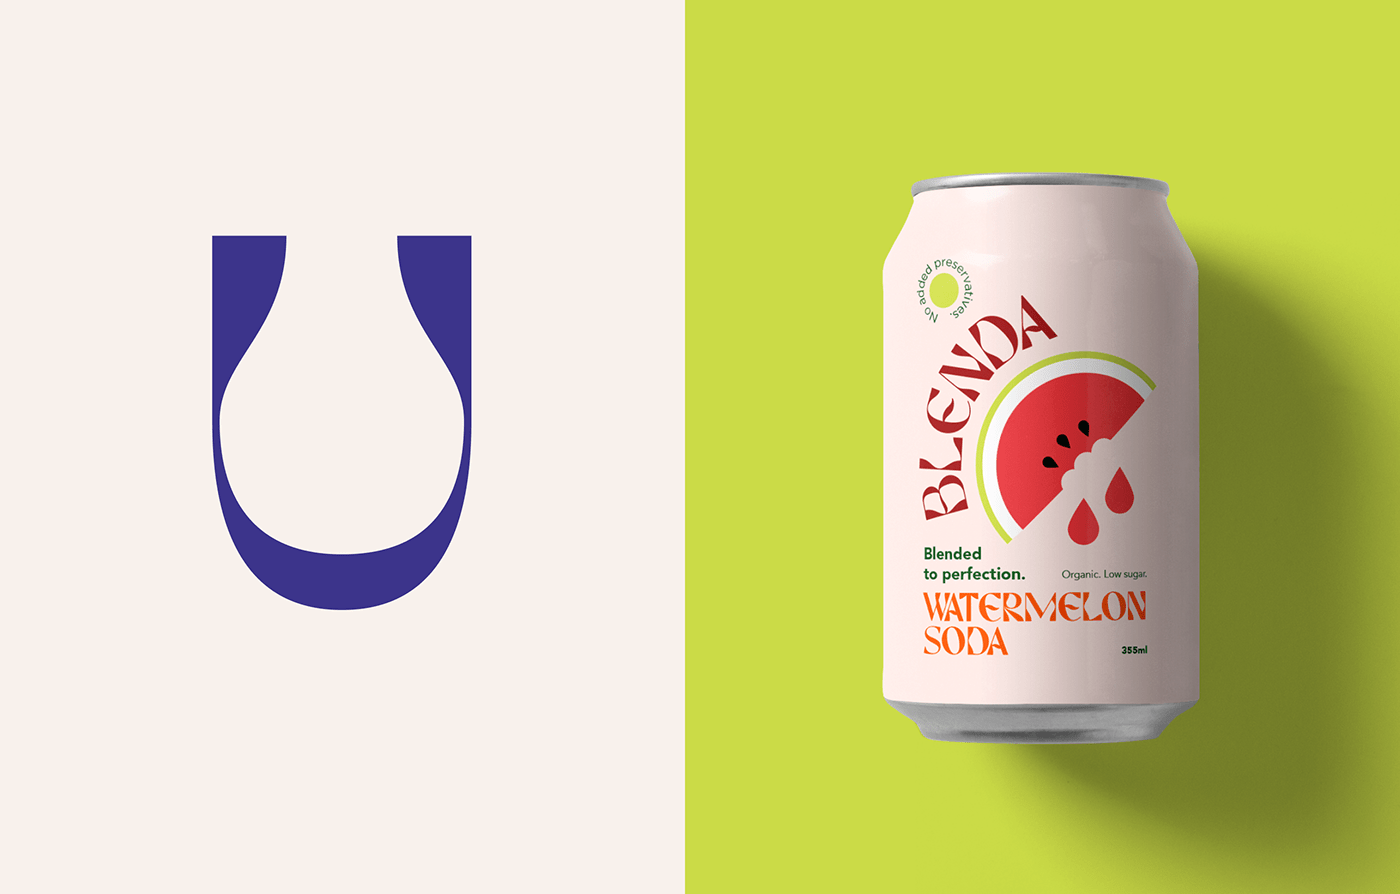 Blenda soda can conceptual packaging design and branding. Watermelon soda packaging design.